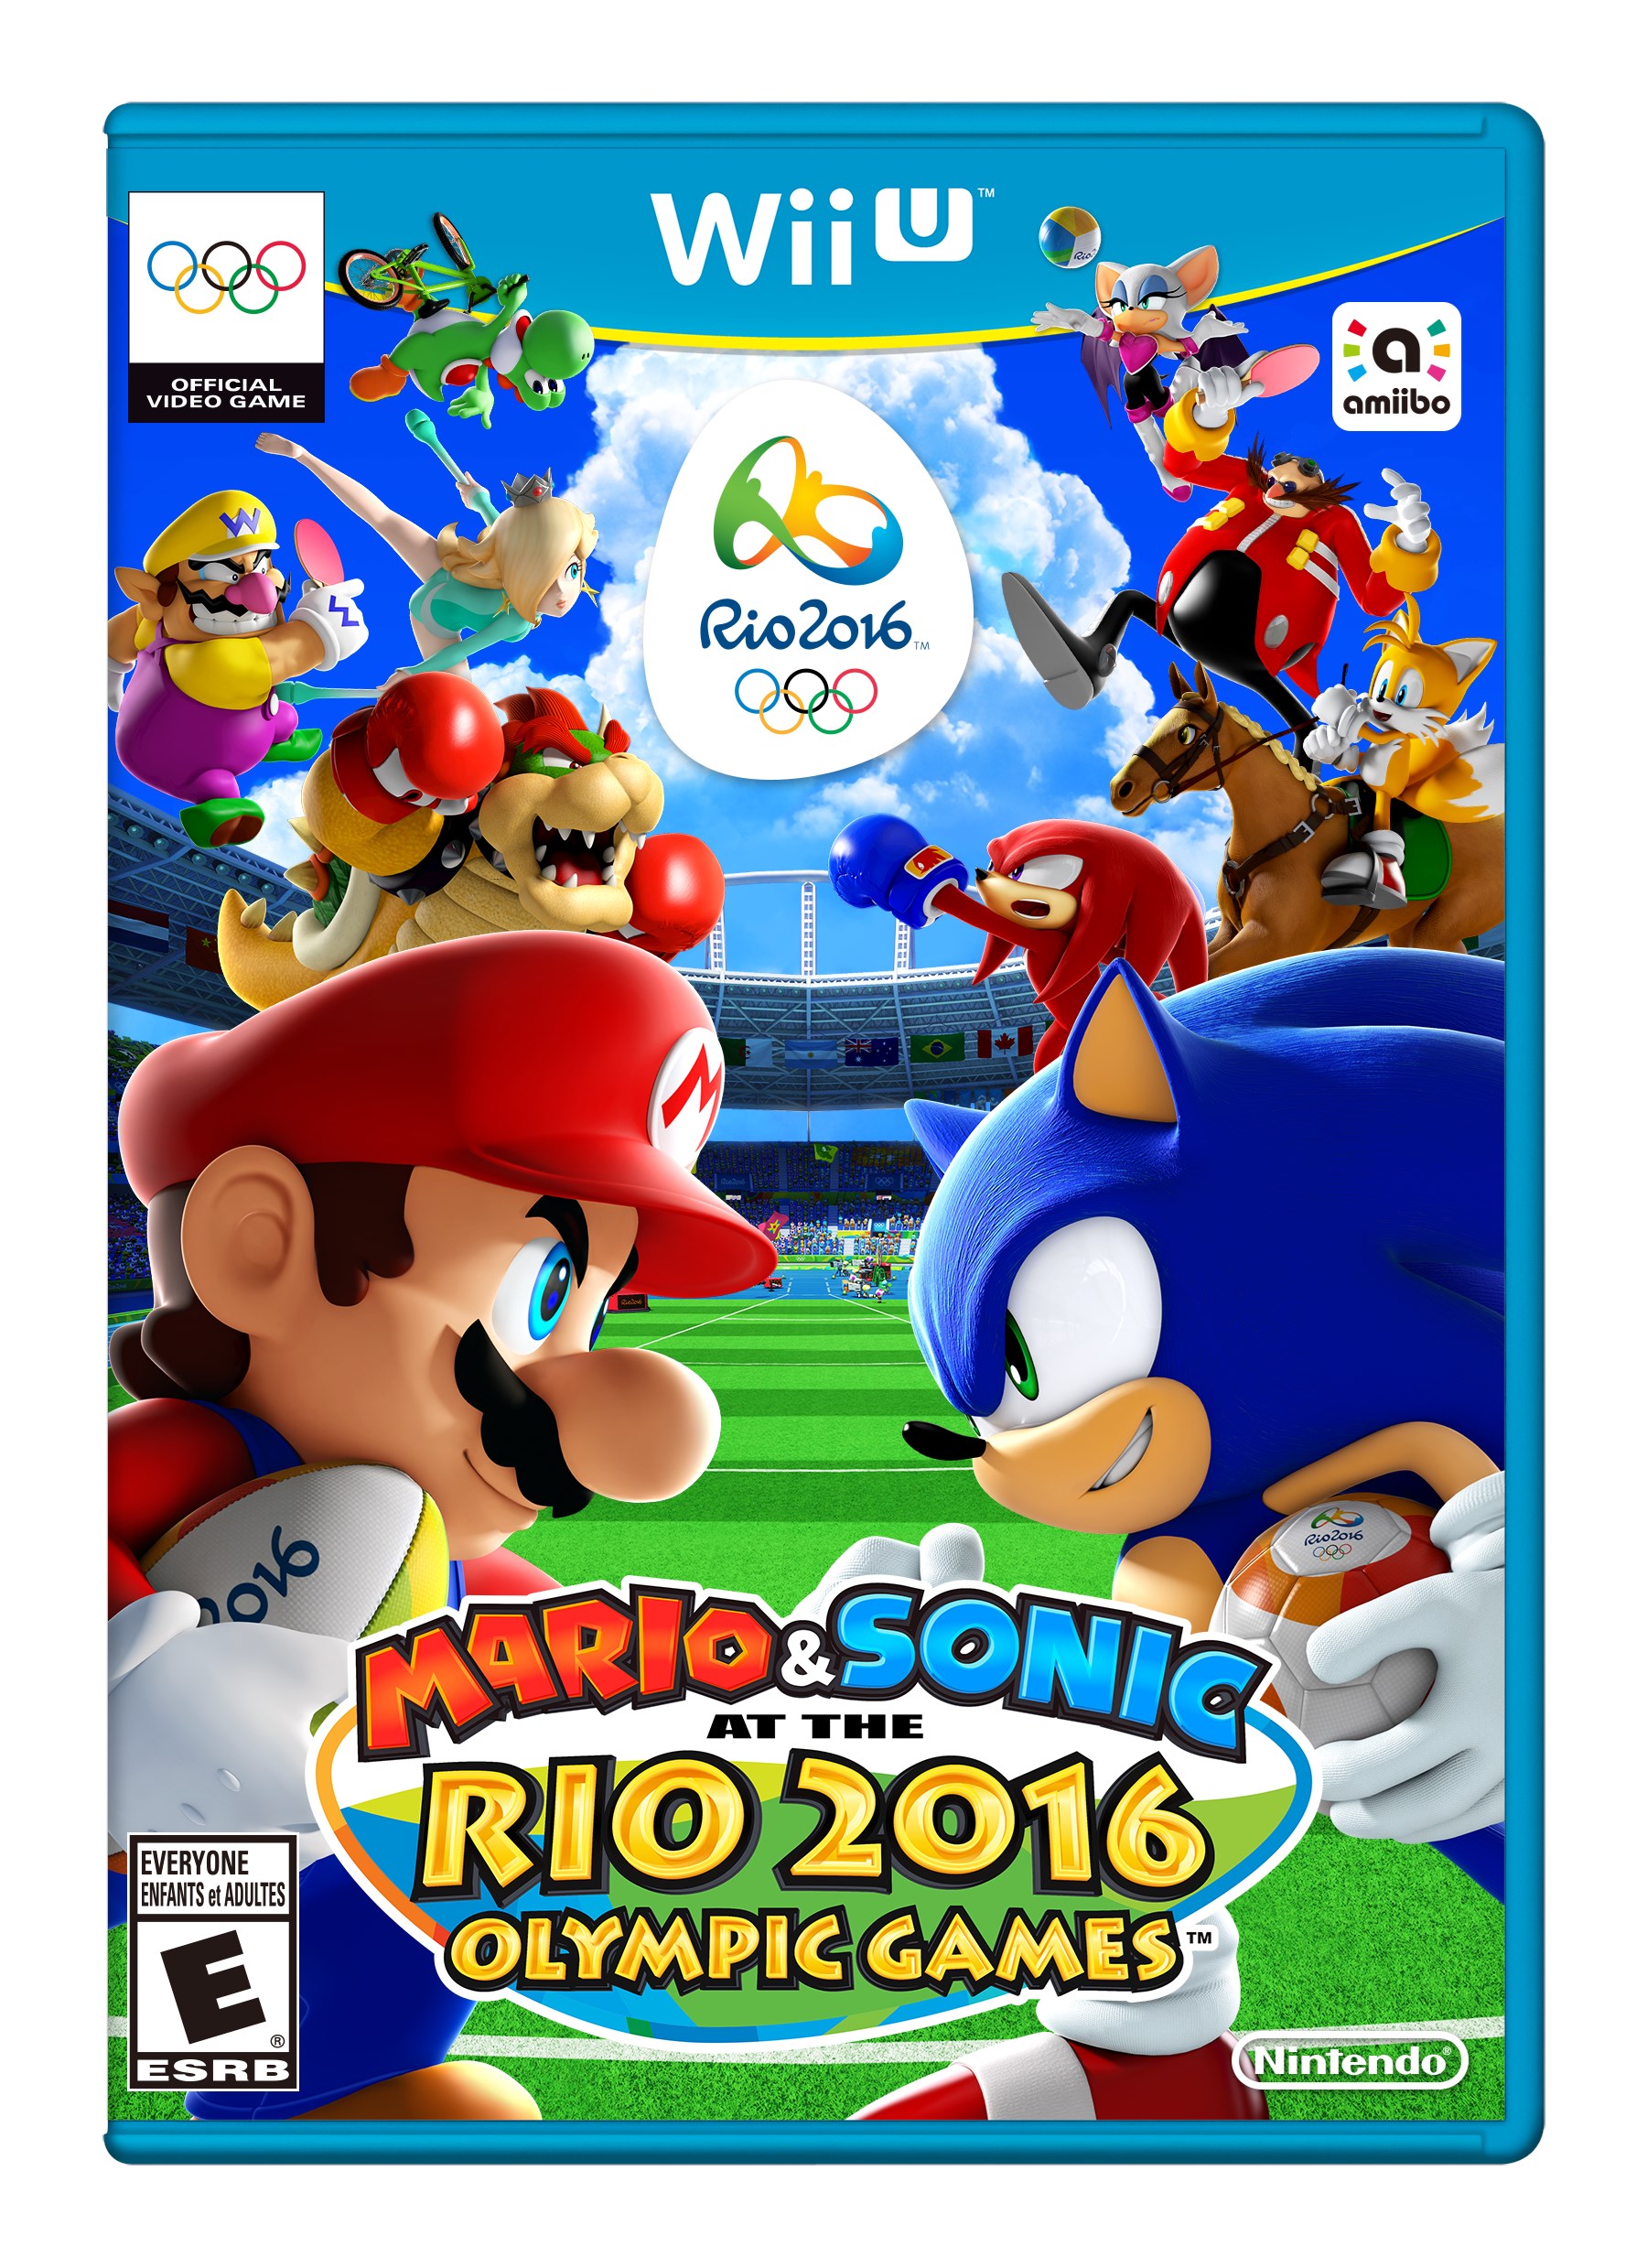 Mario & Sonic at Rio 2016 Olympic Games Wii U launches June 24 - Gematsu